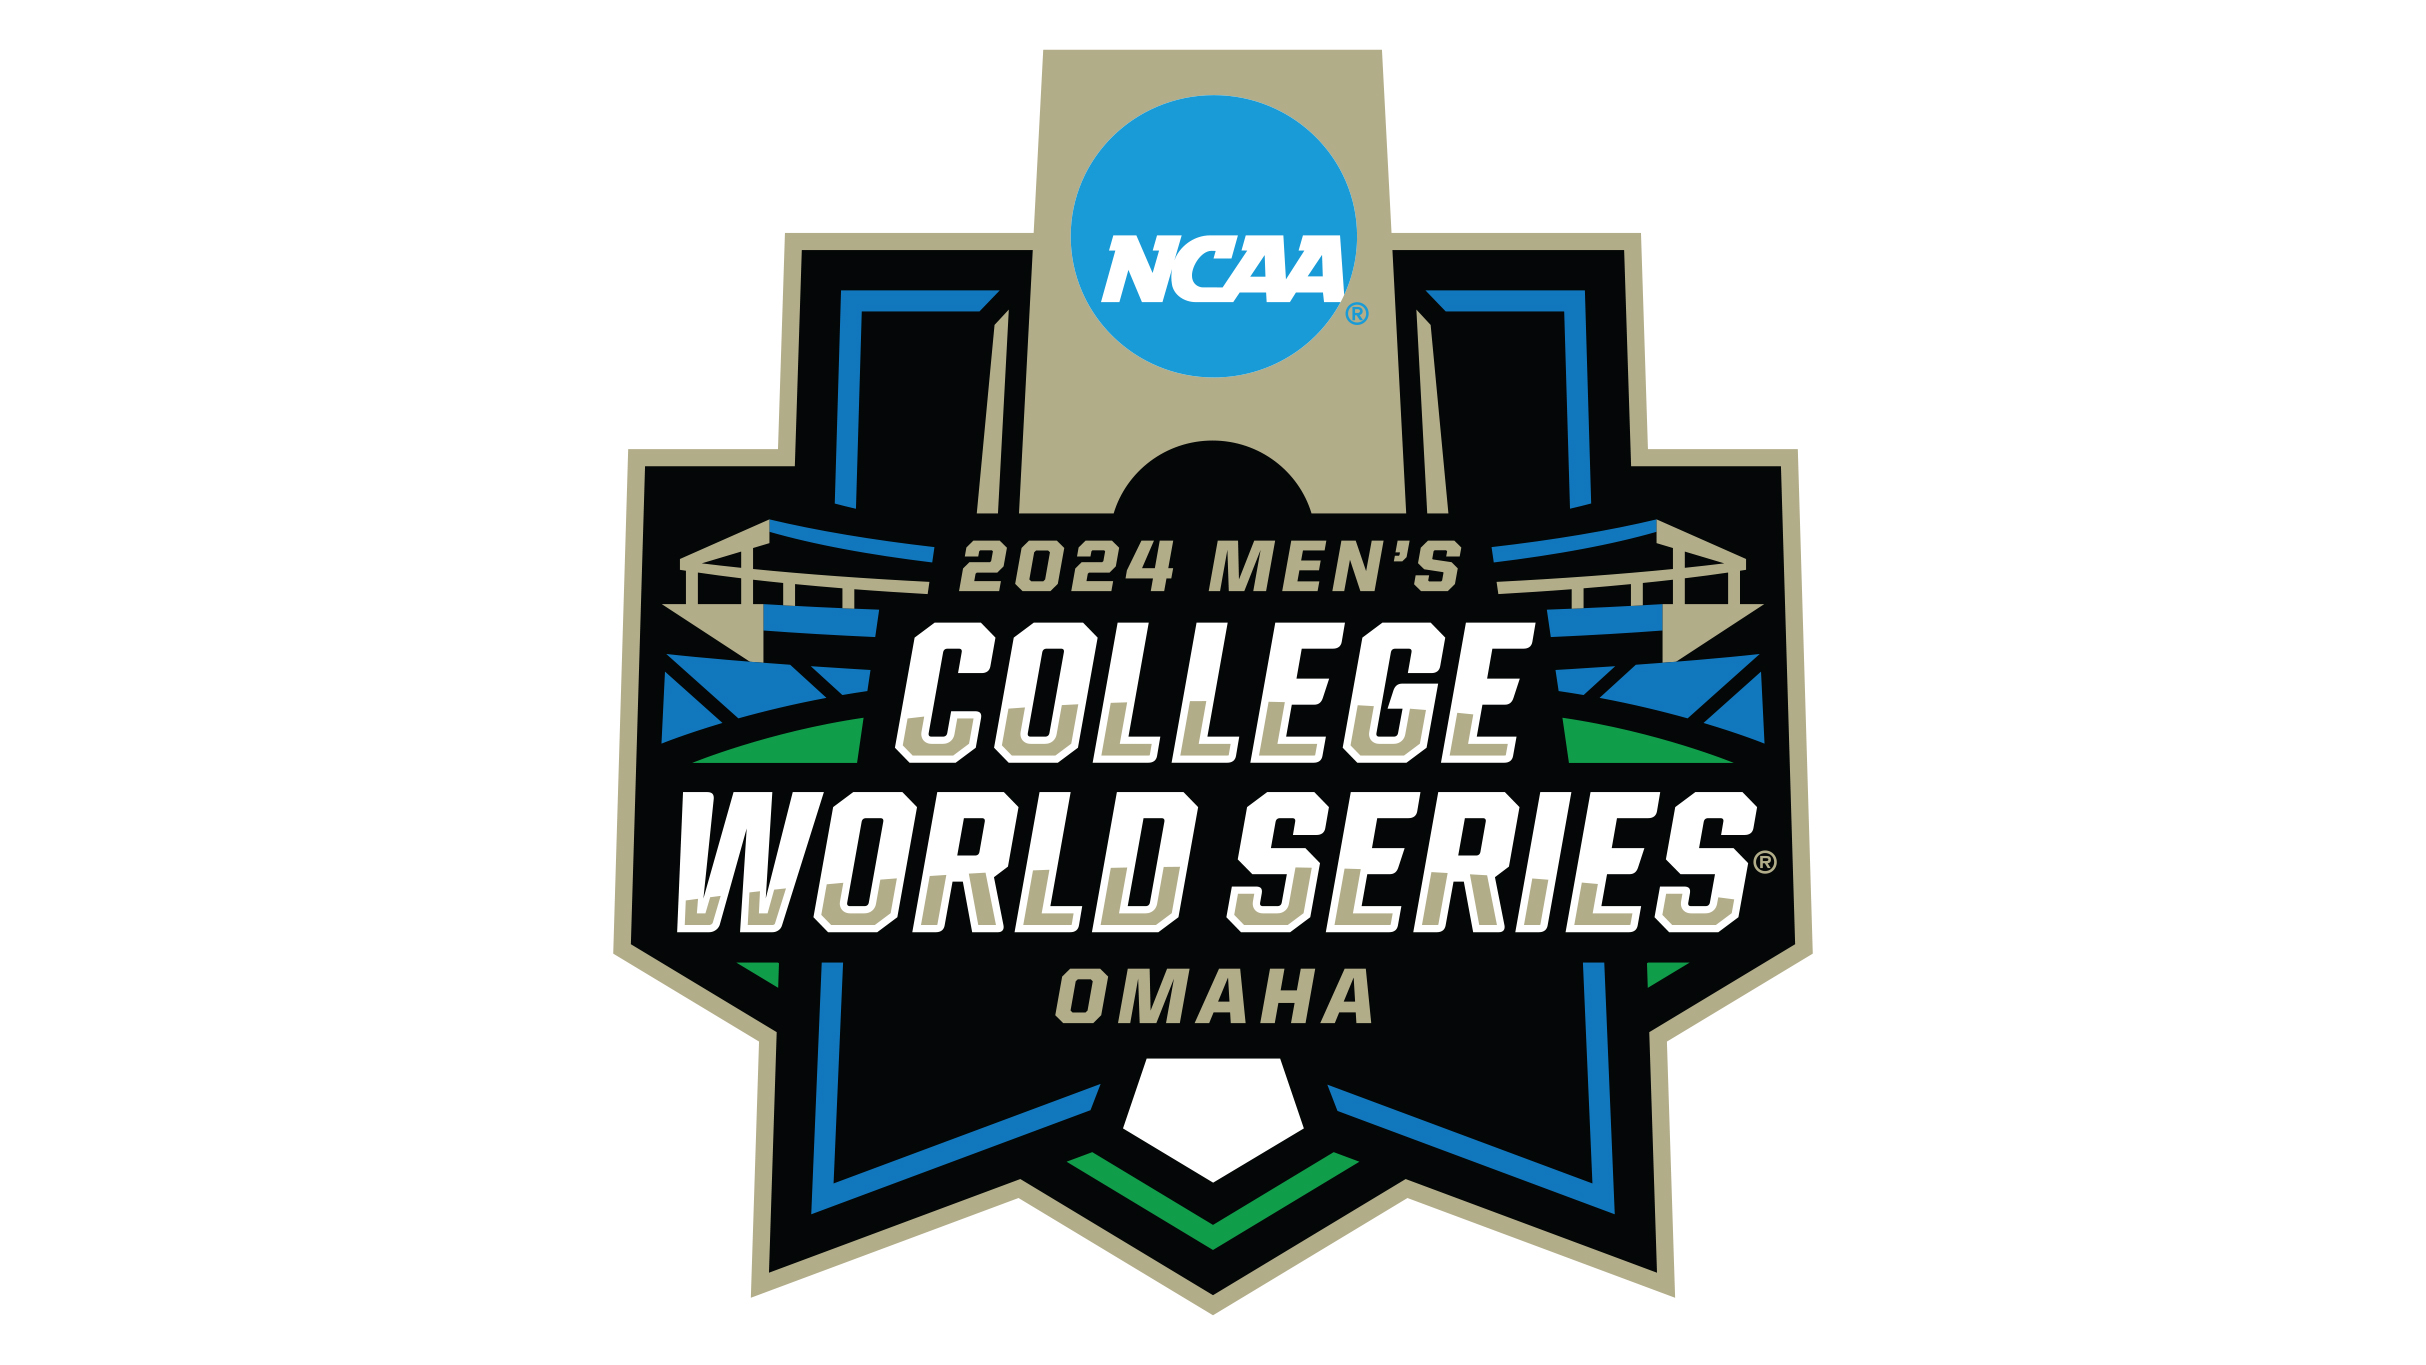 NCAA Men's College World Series Parking